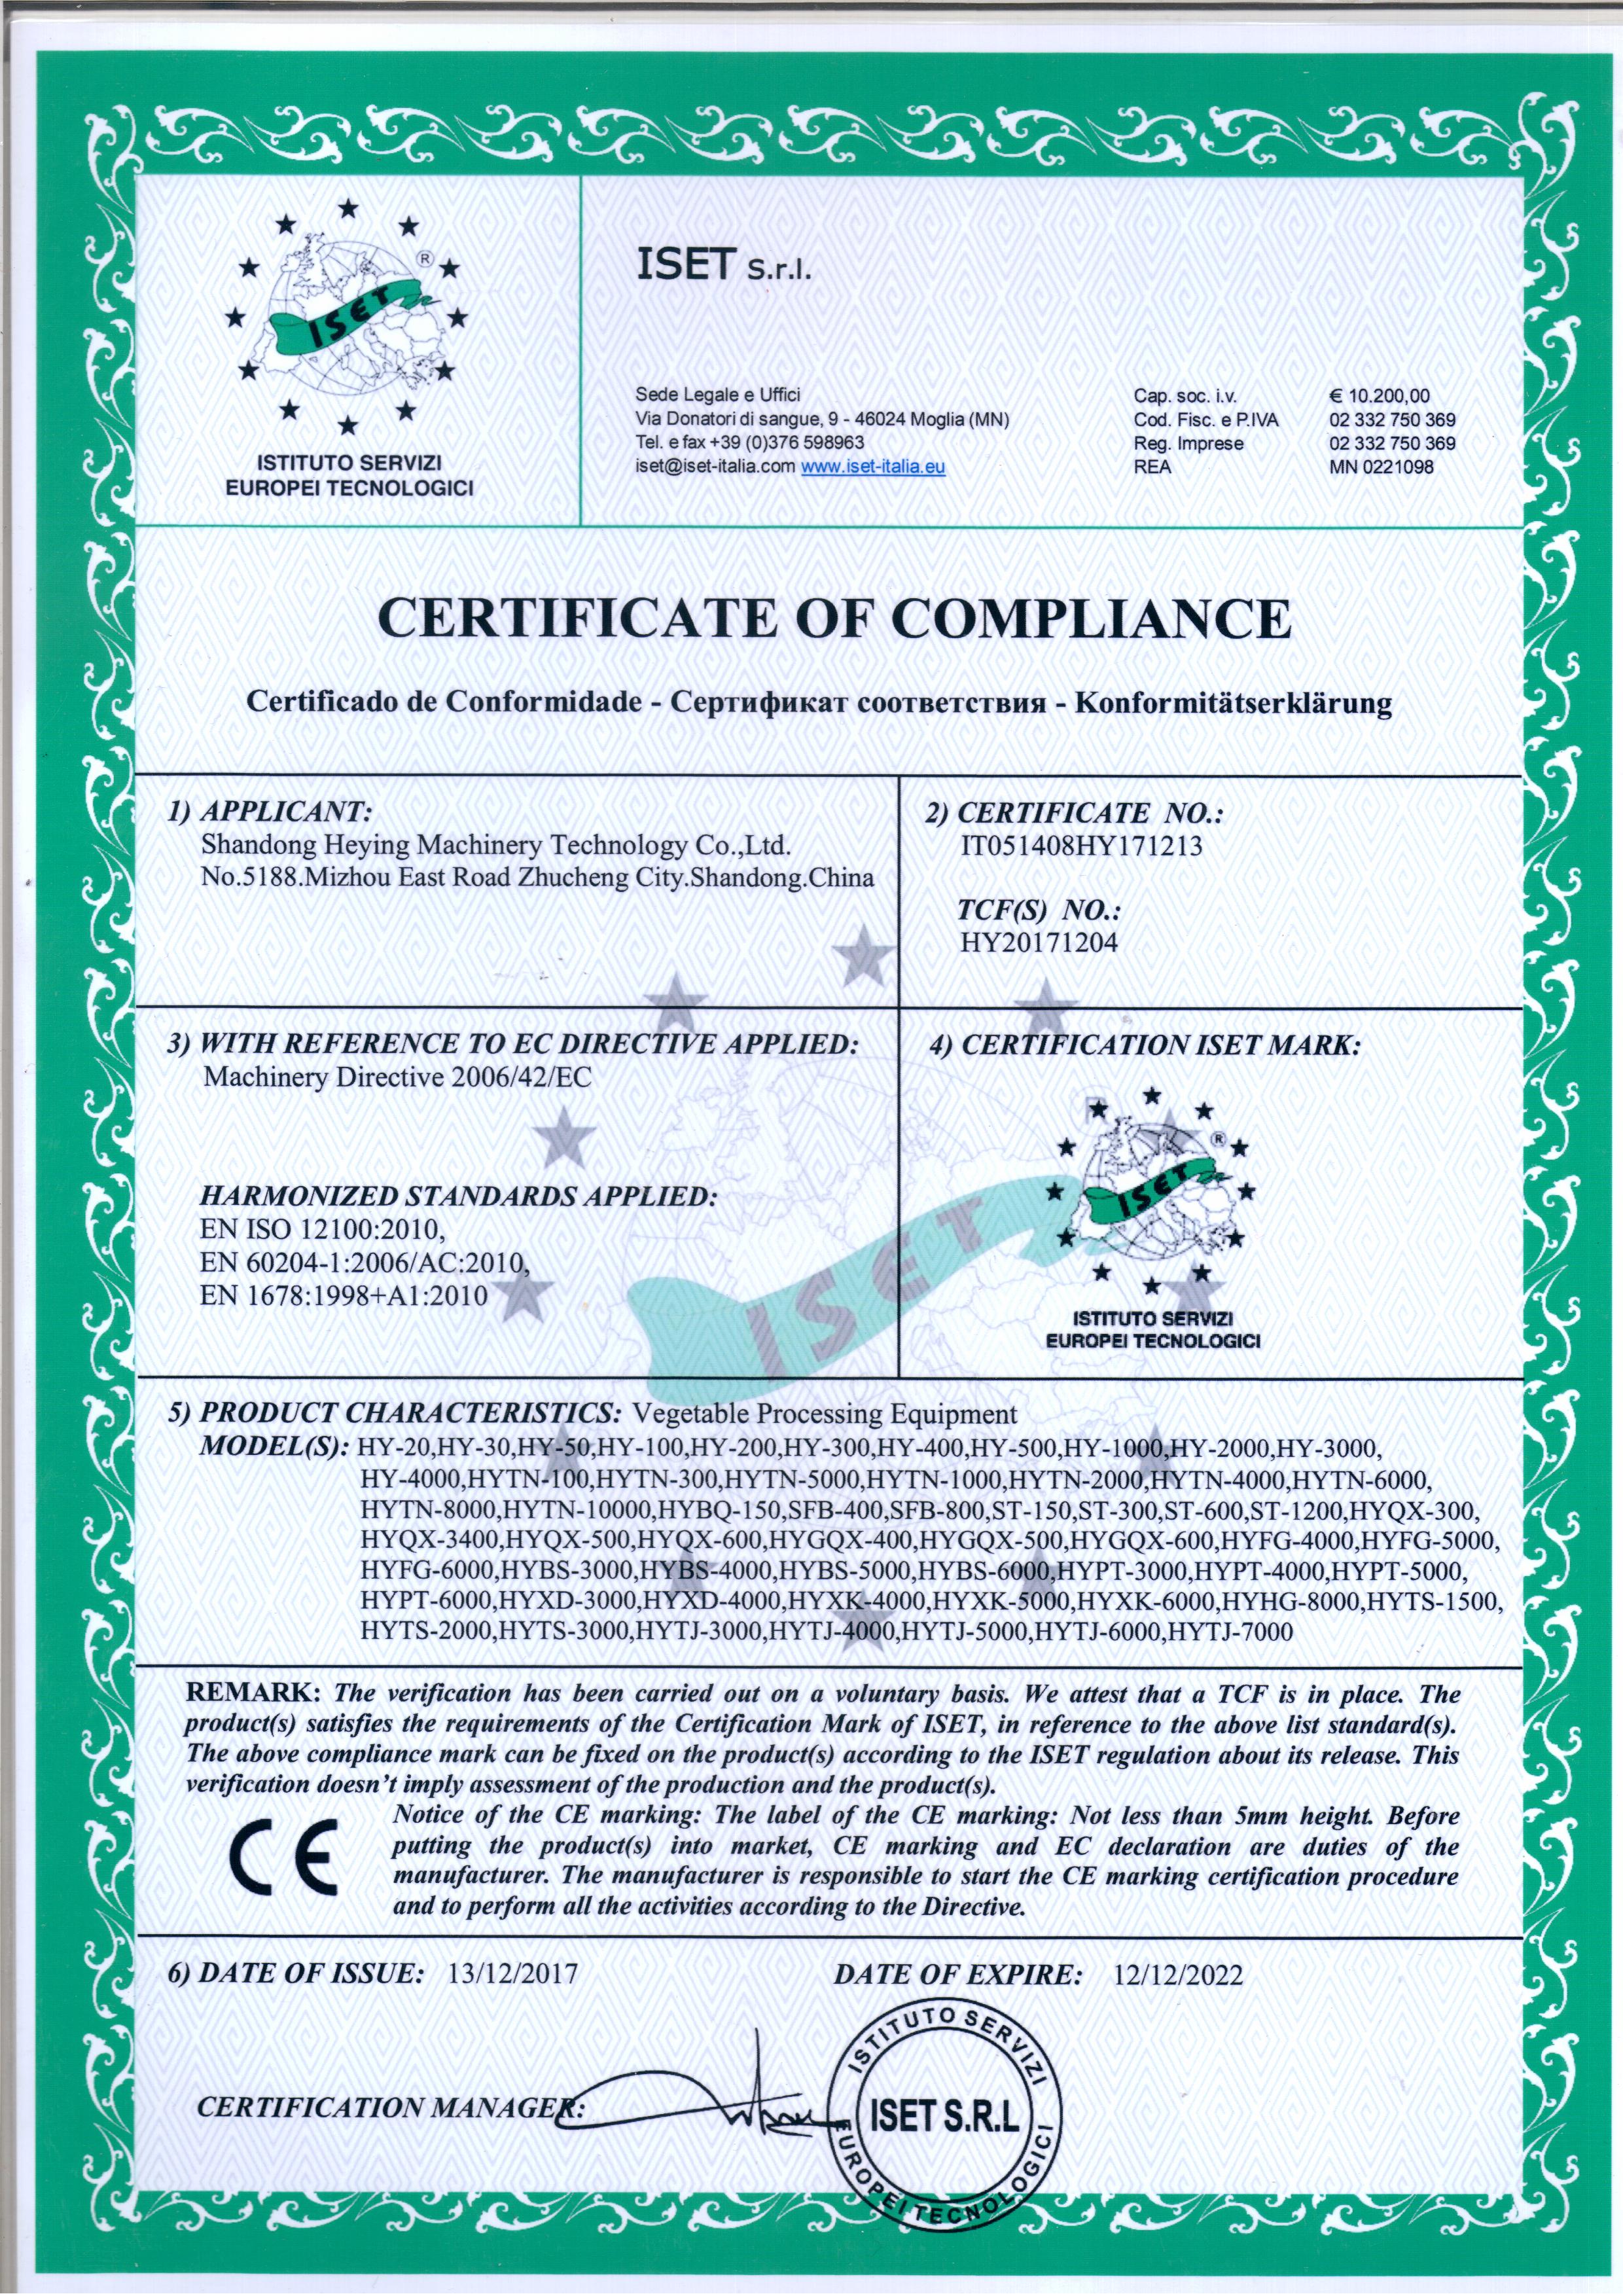 EU certificate(CE)